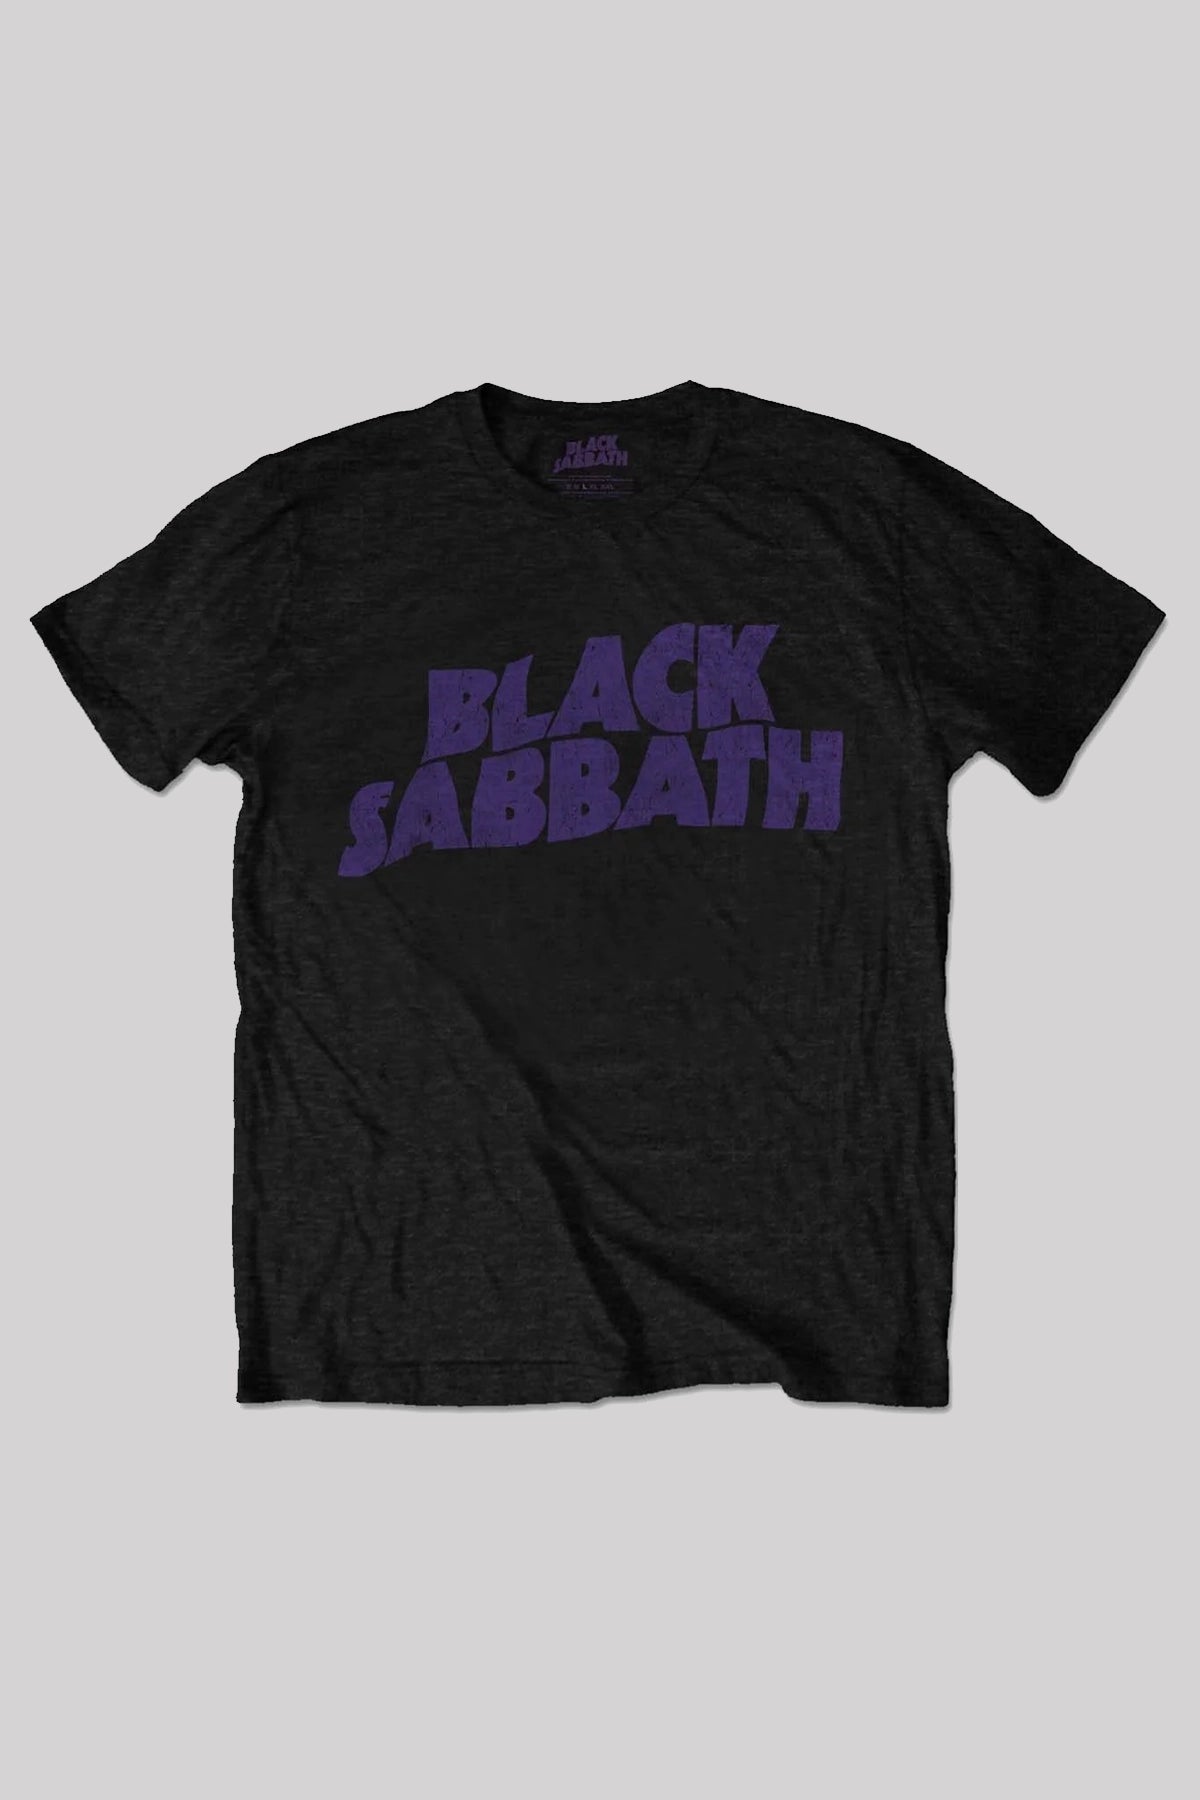 Black Sabbath Unisex T-Shirt: Wavy Logo Vintage